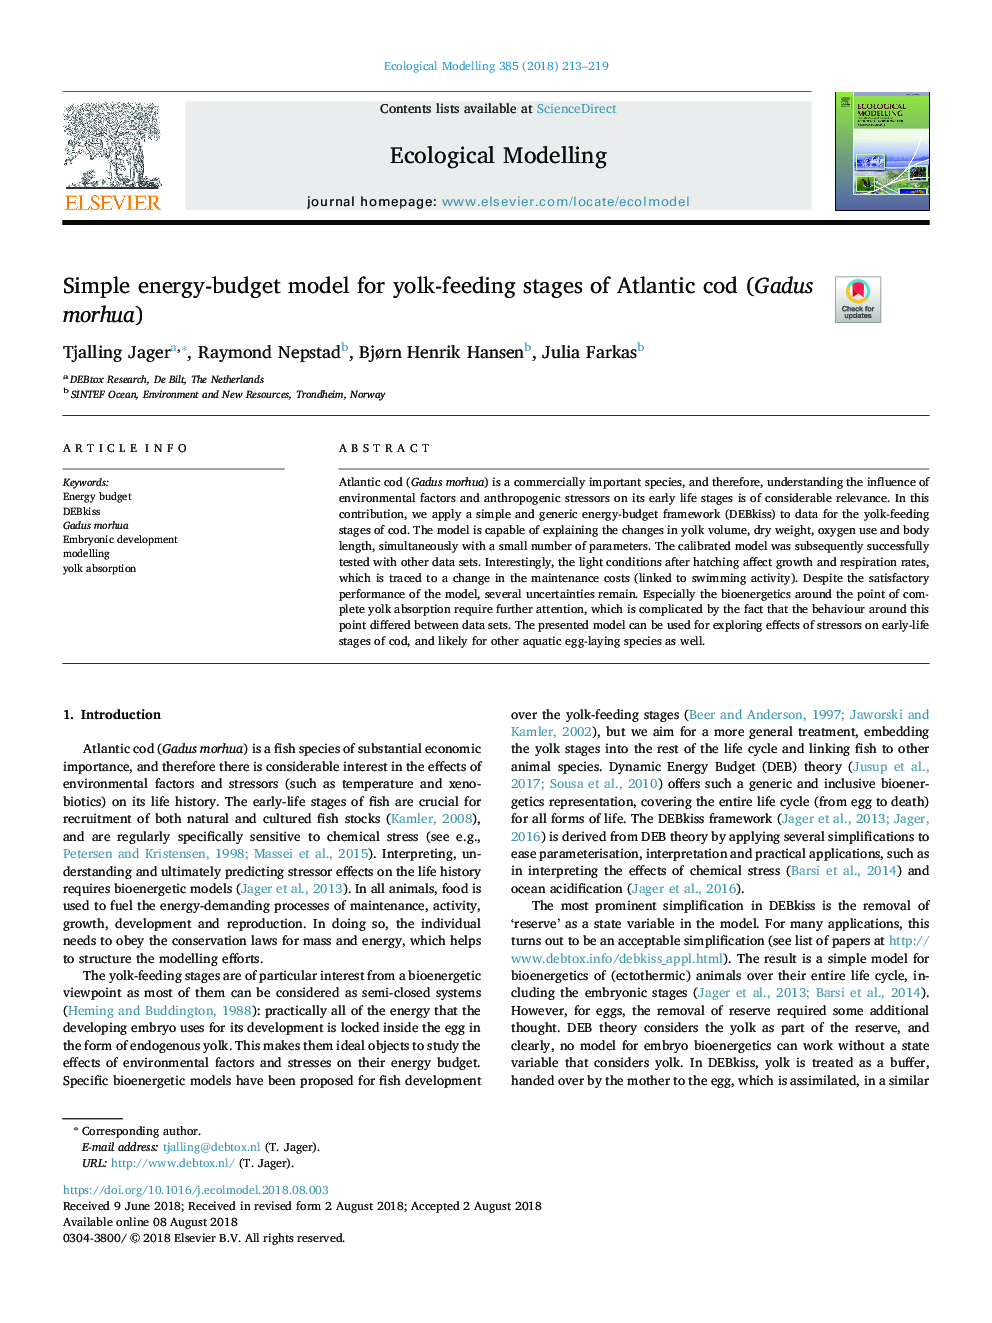 Simple energy-budget model for yolk-feeding stages of Atlantic cod (Gadus morhua)